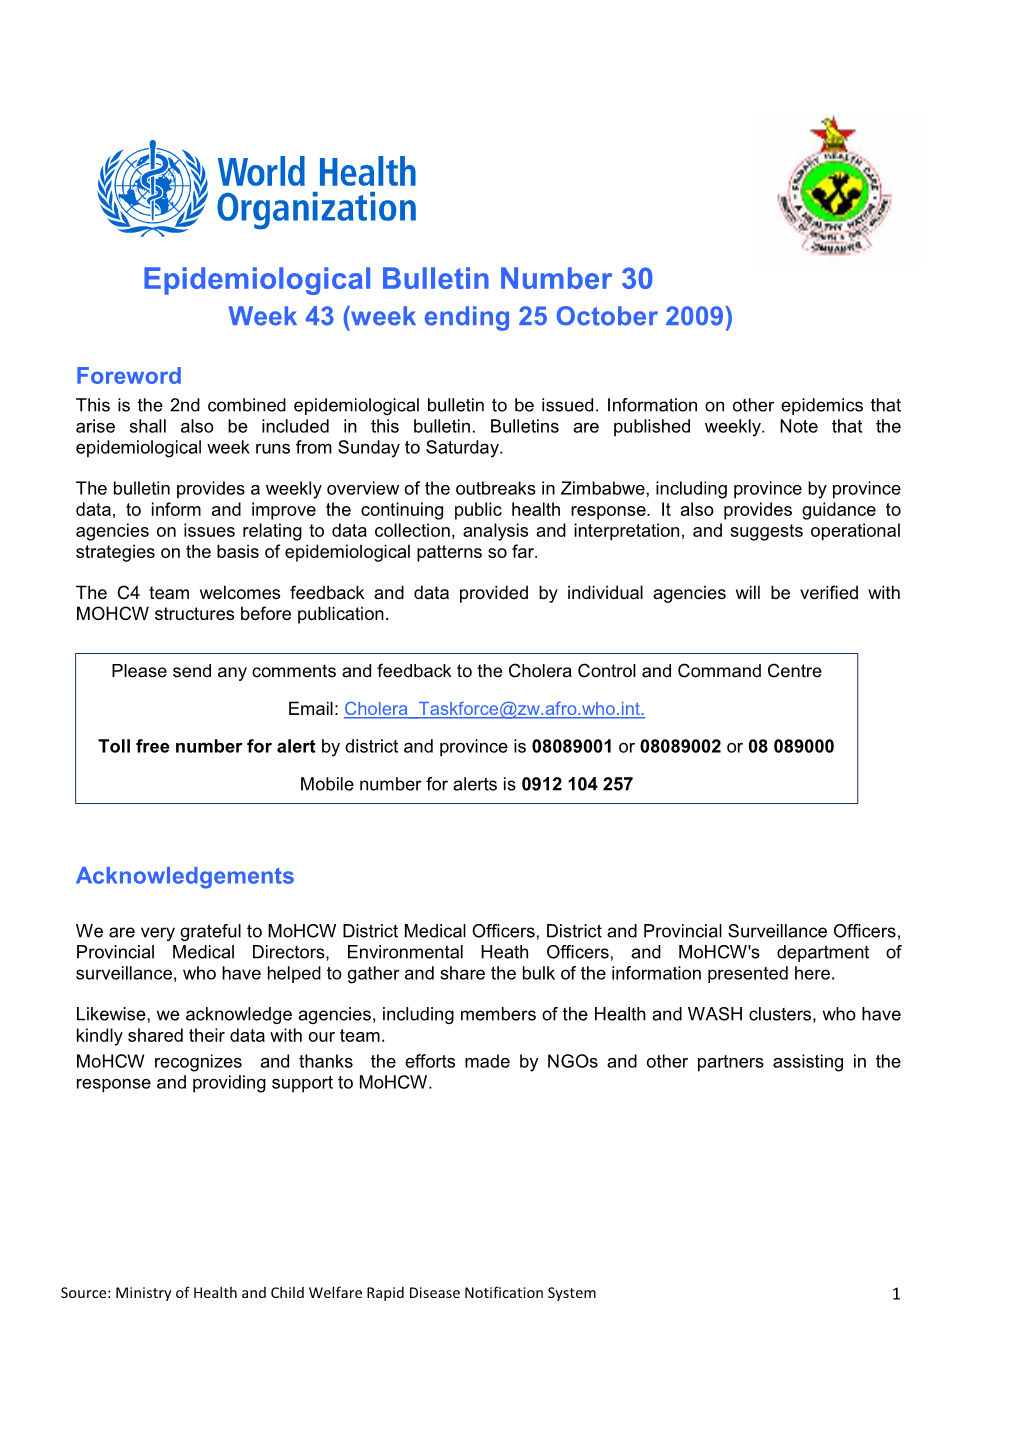 Epidemiological Bulletin Number 30 Week 43 (Week Ending 25 October 2009)